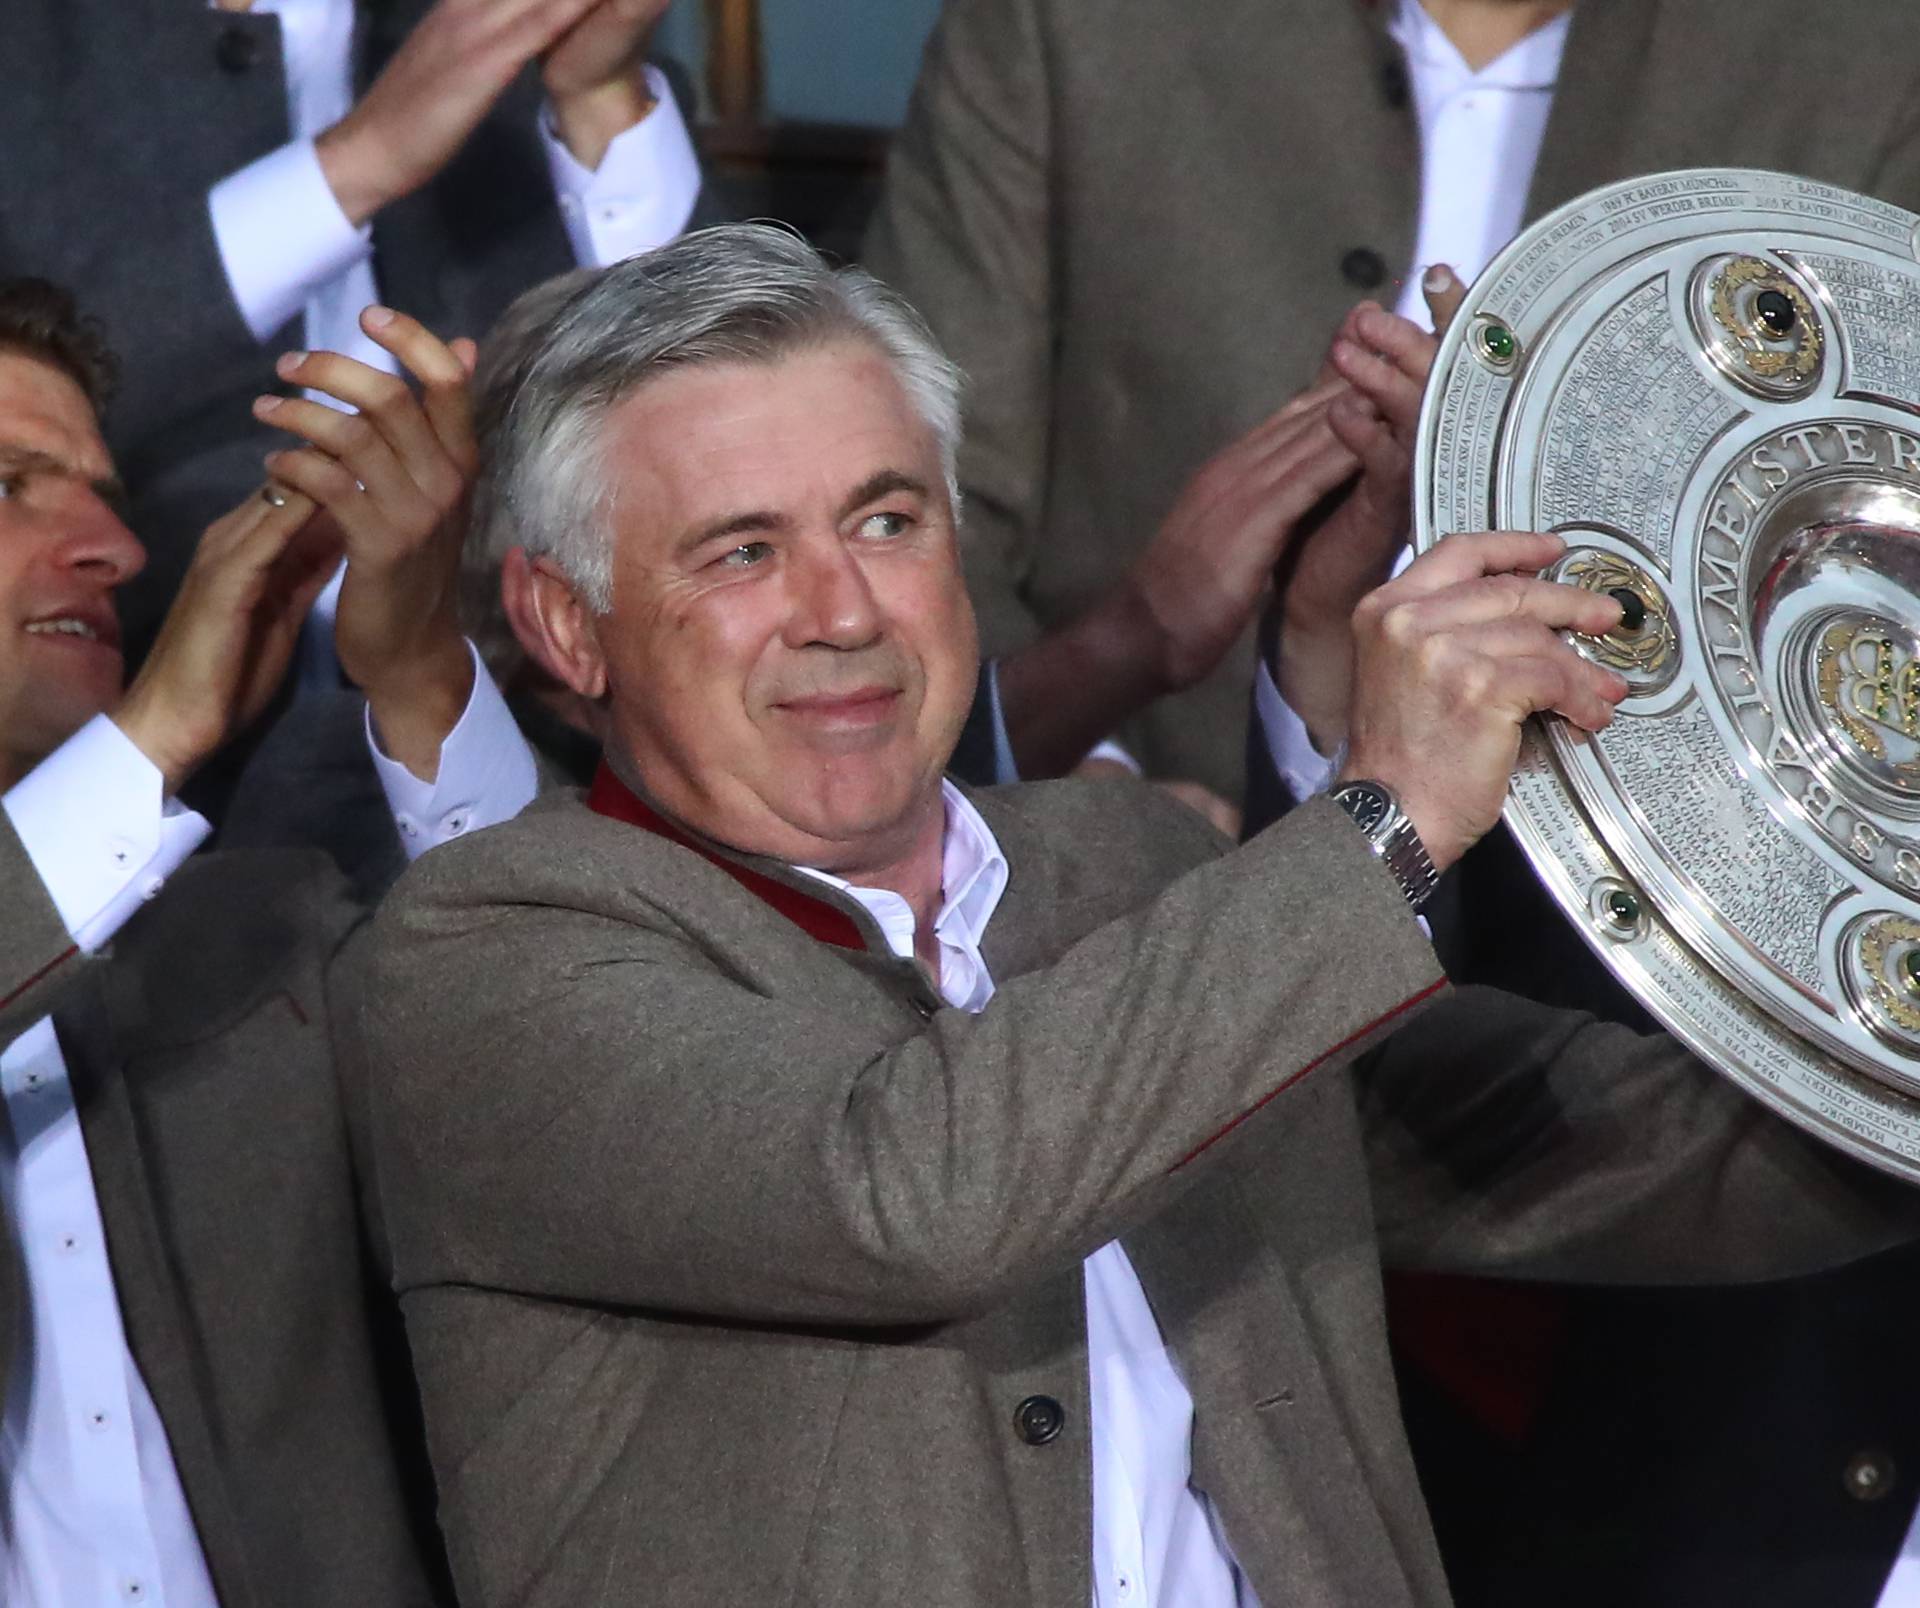 Bayern Munich coach Carlo Ancelotti celebrates with the trophy  during the presentation